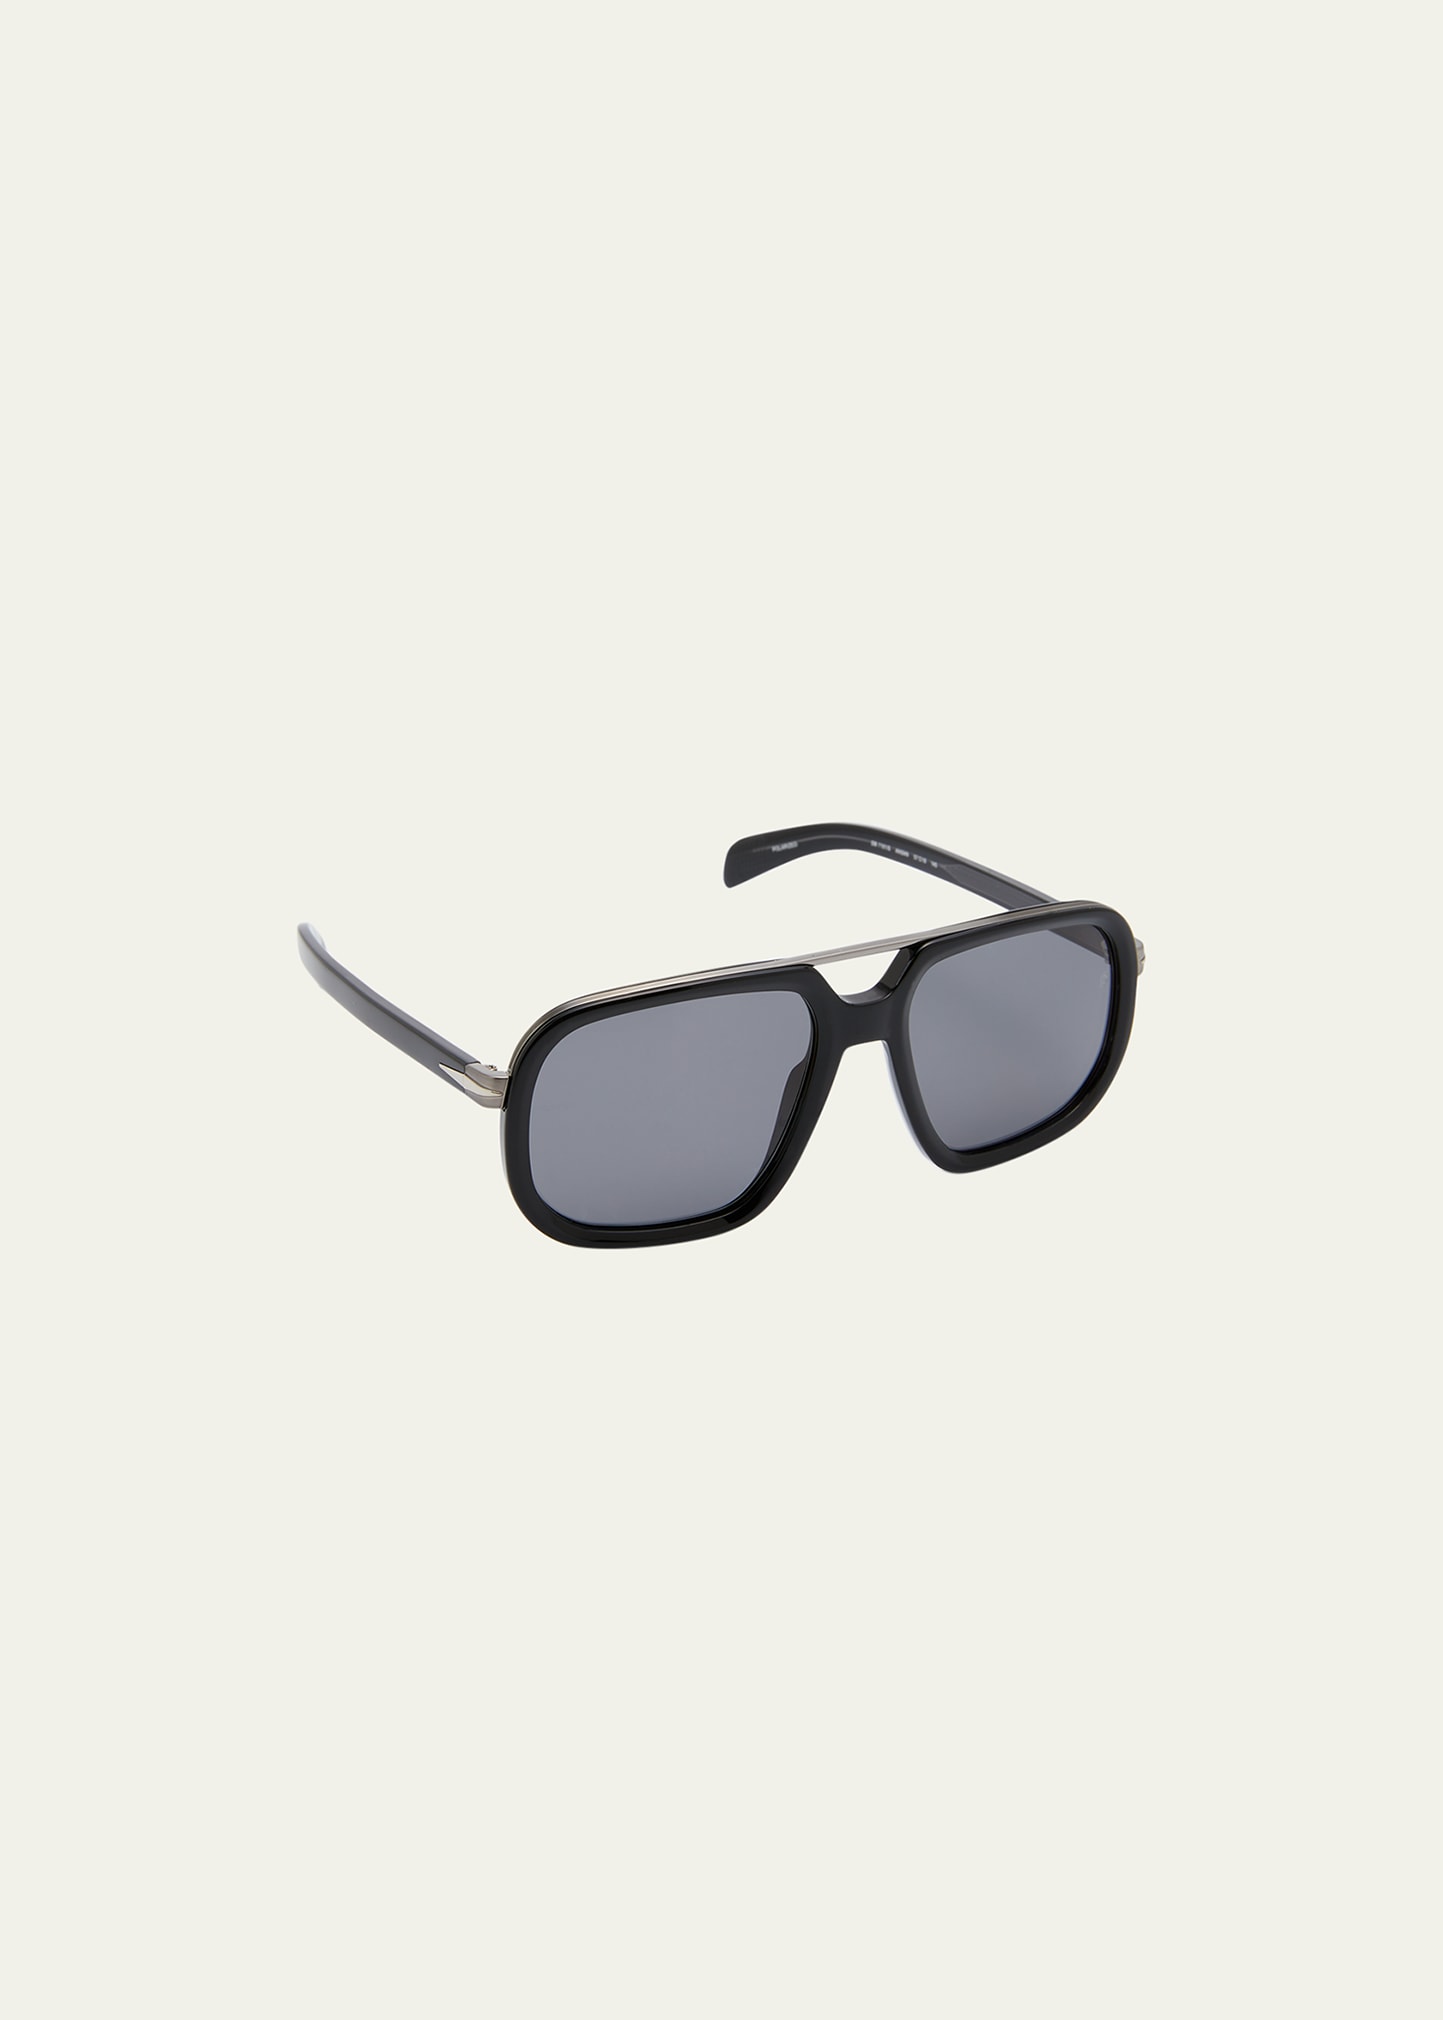 Men's Double-Bridge Square Polarized Sunglasses